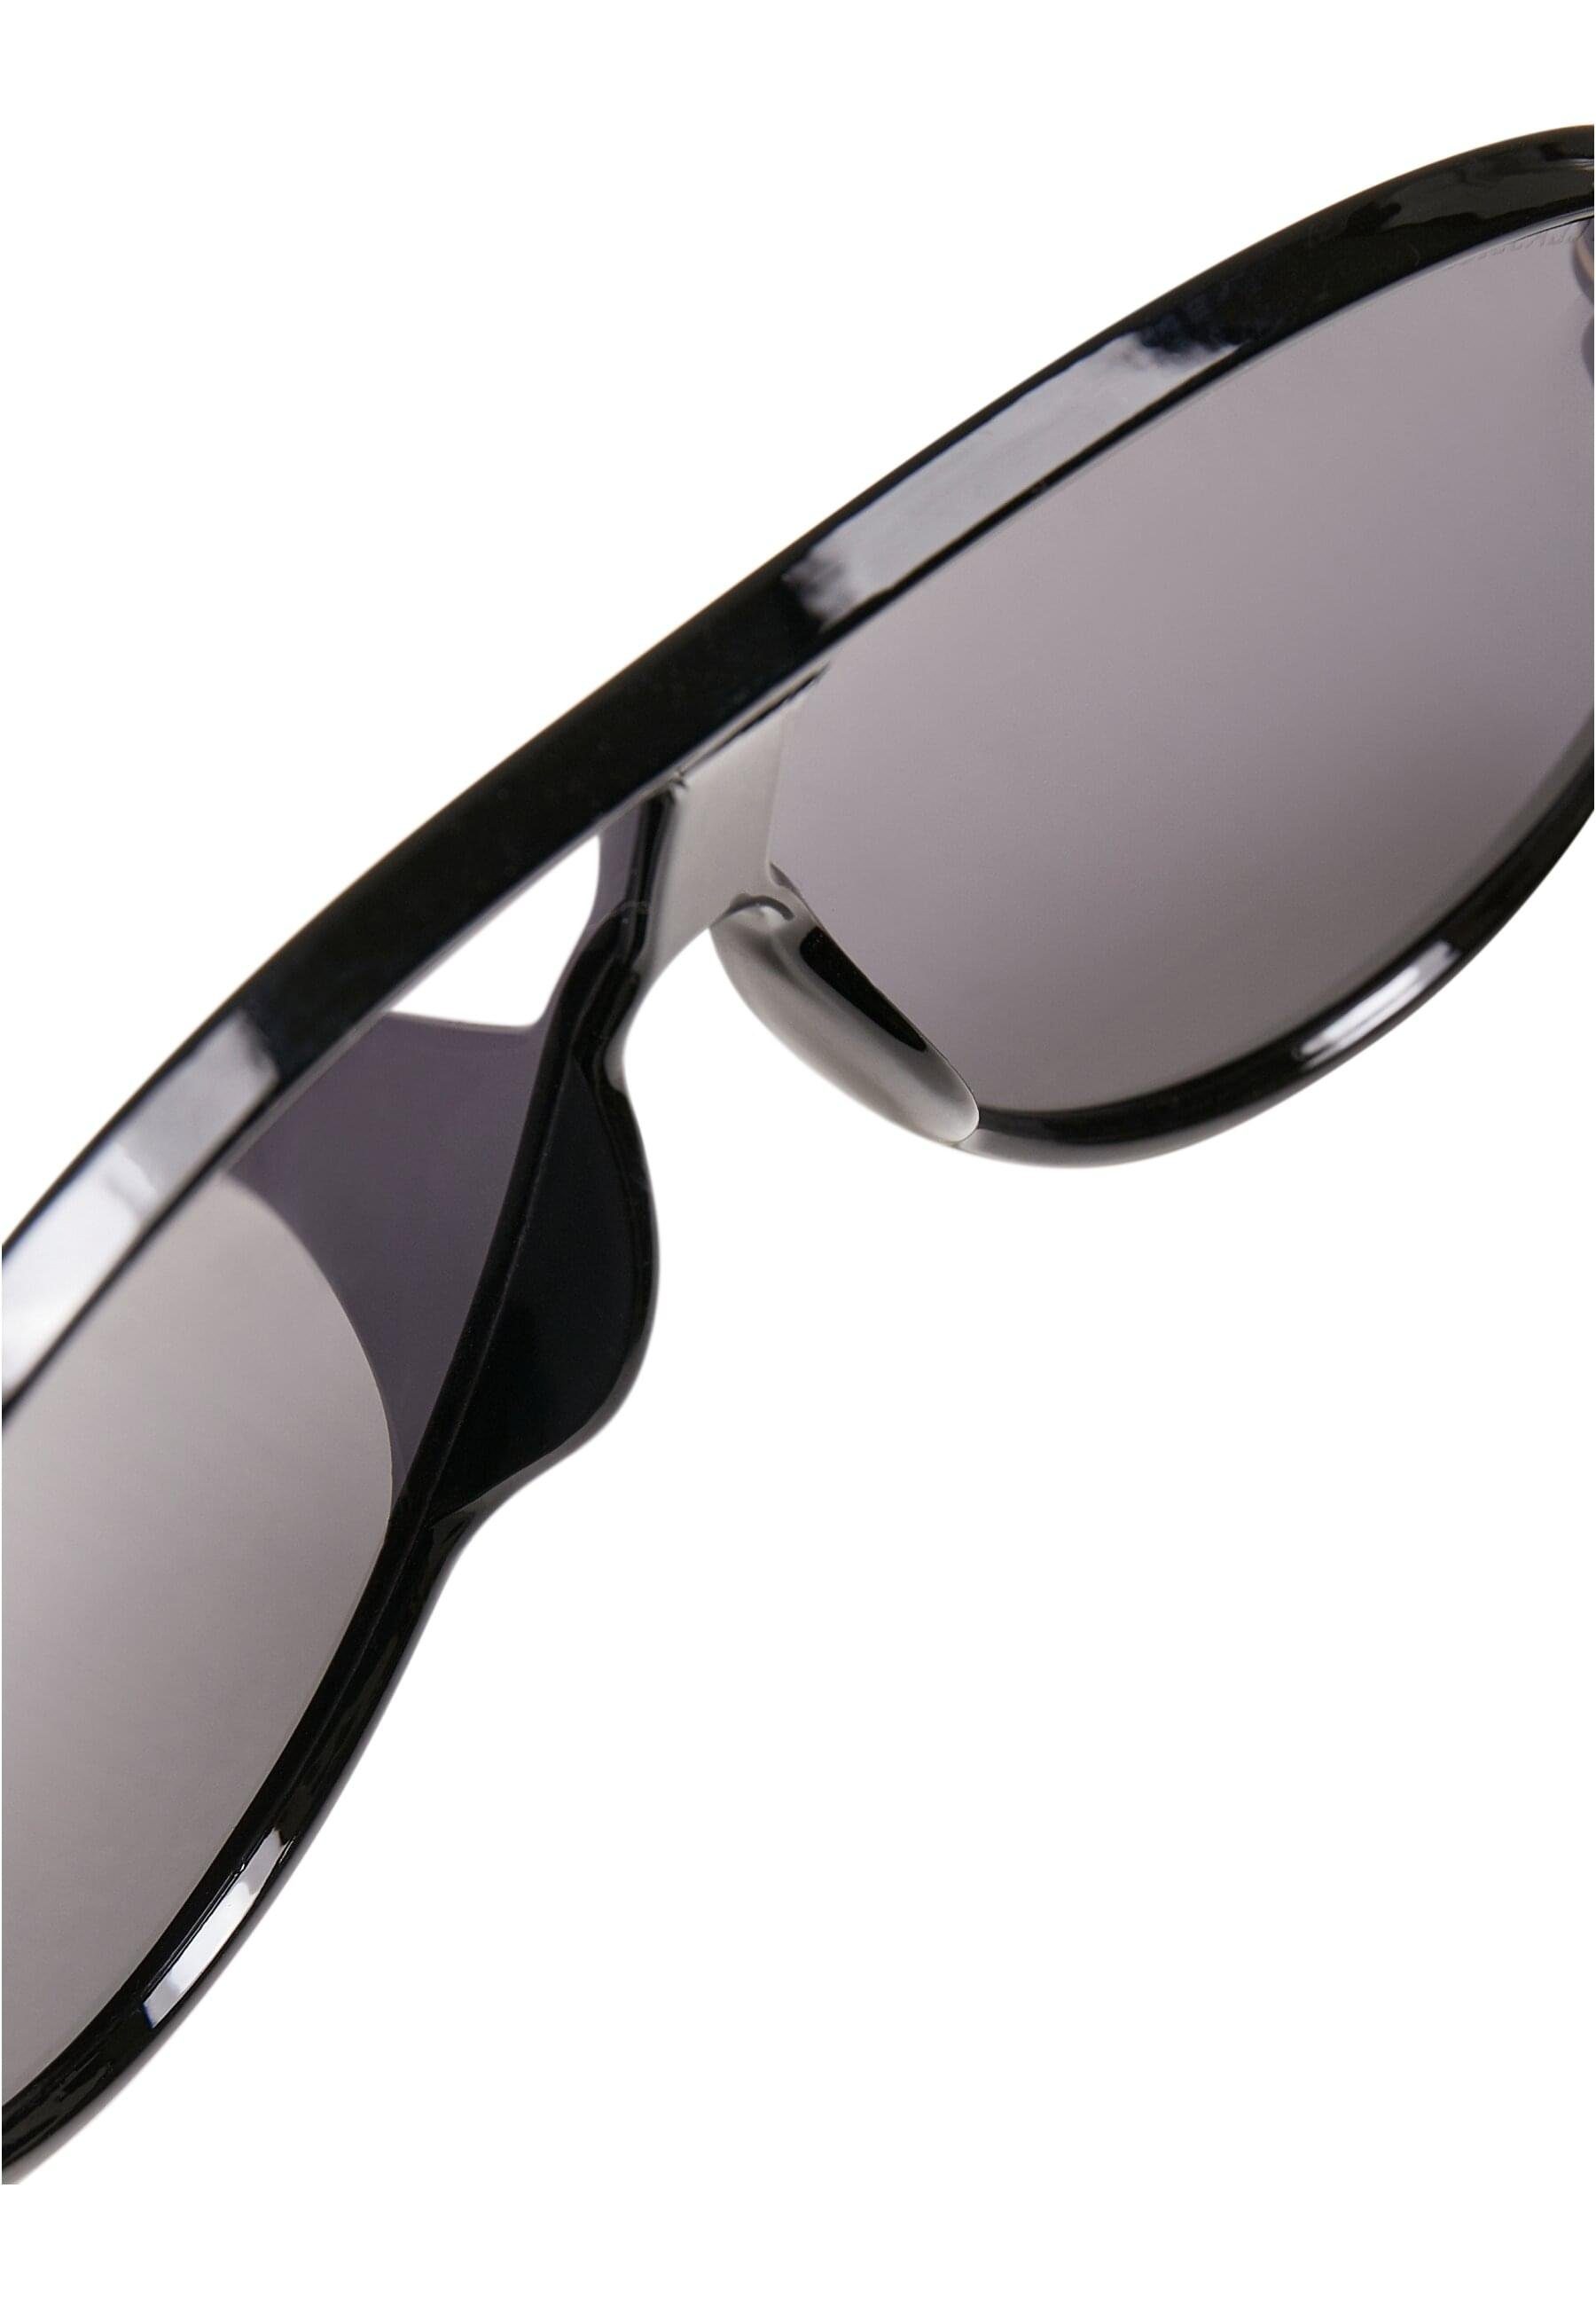 Sonnenbrille URBAN With Unisex Naxos Sunglasses Chain CLASSICS